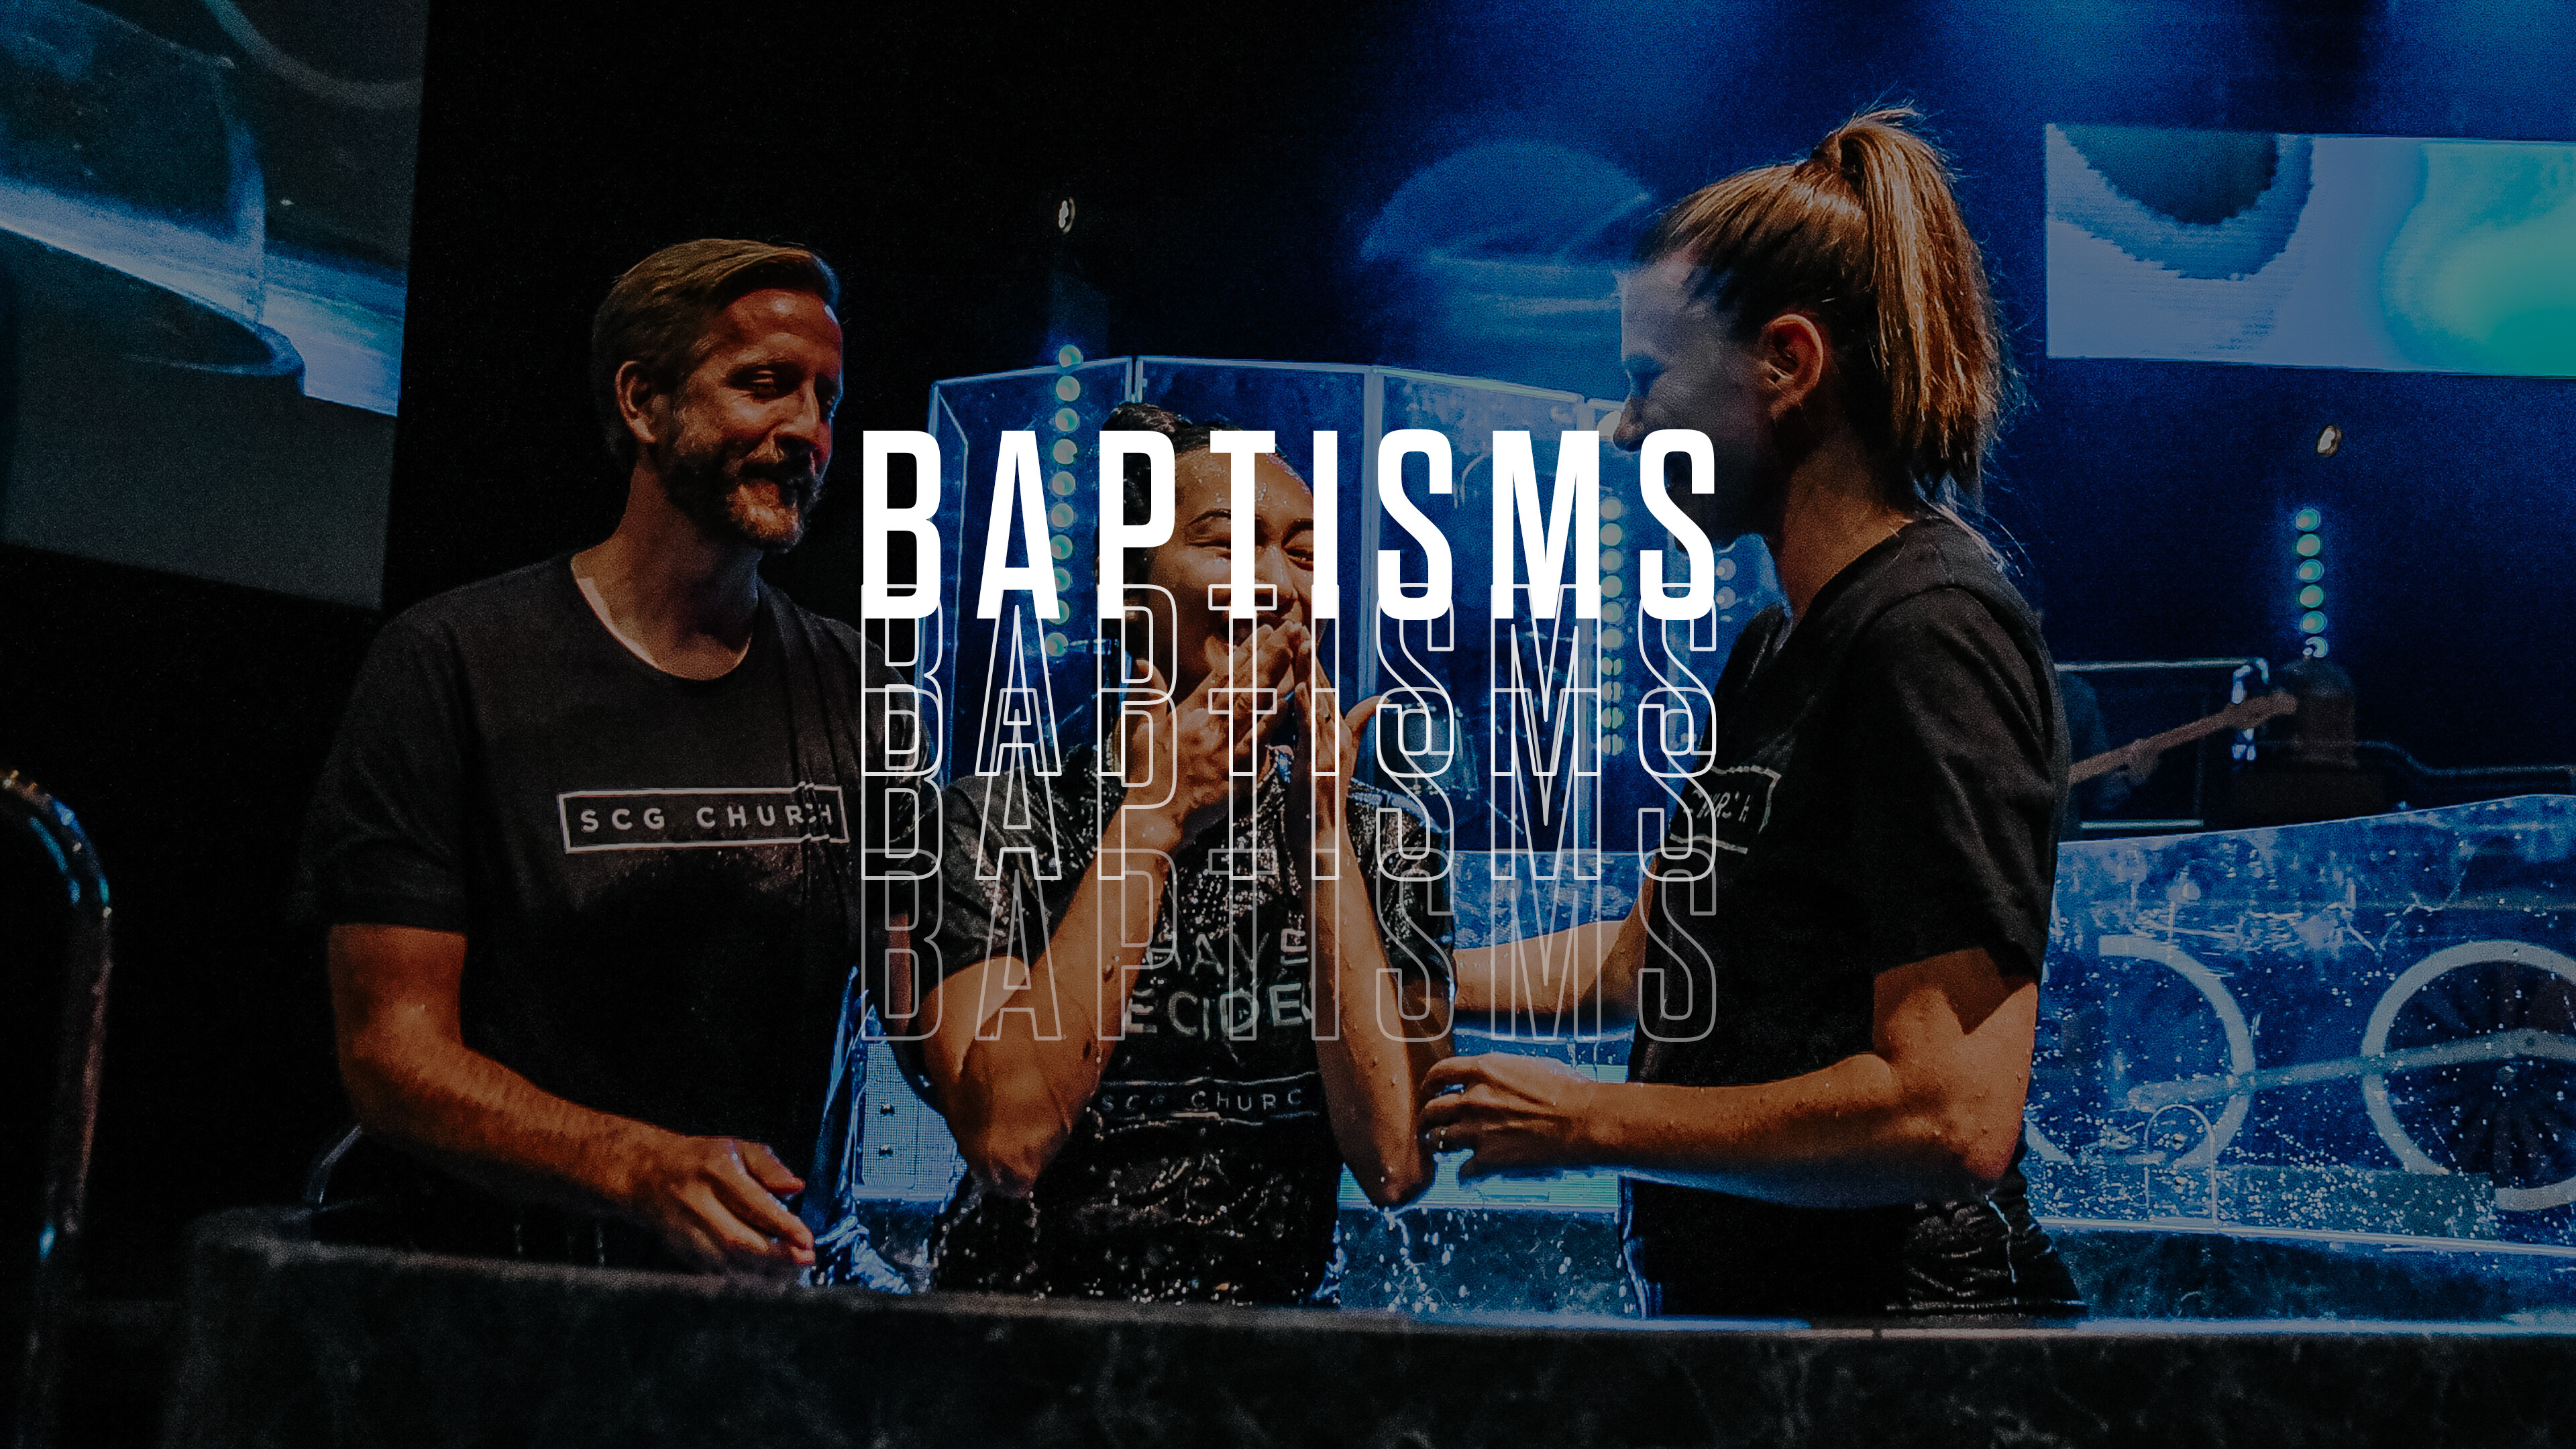 BAPTISM 